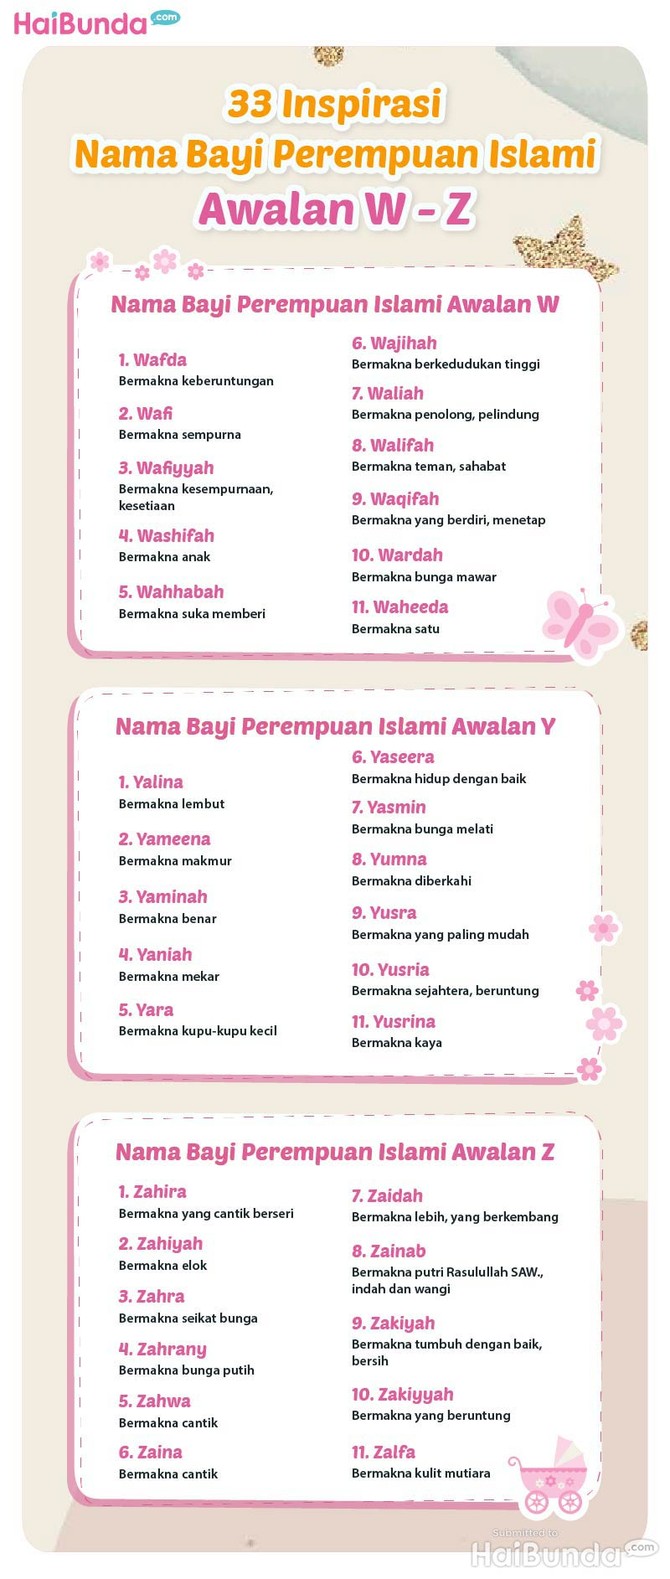 Infografis 33 Inspirasi Nama Bayi Perempuan Islami Awalan W-Z